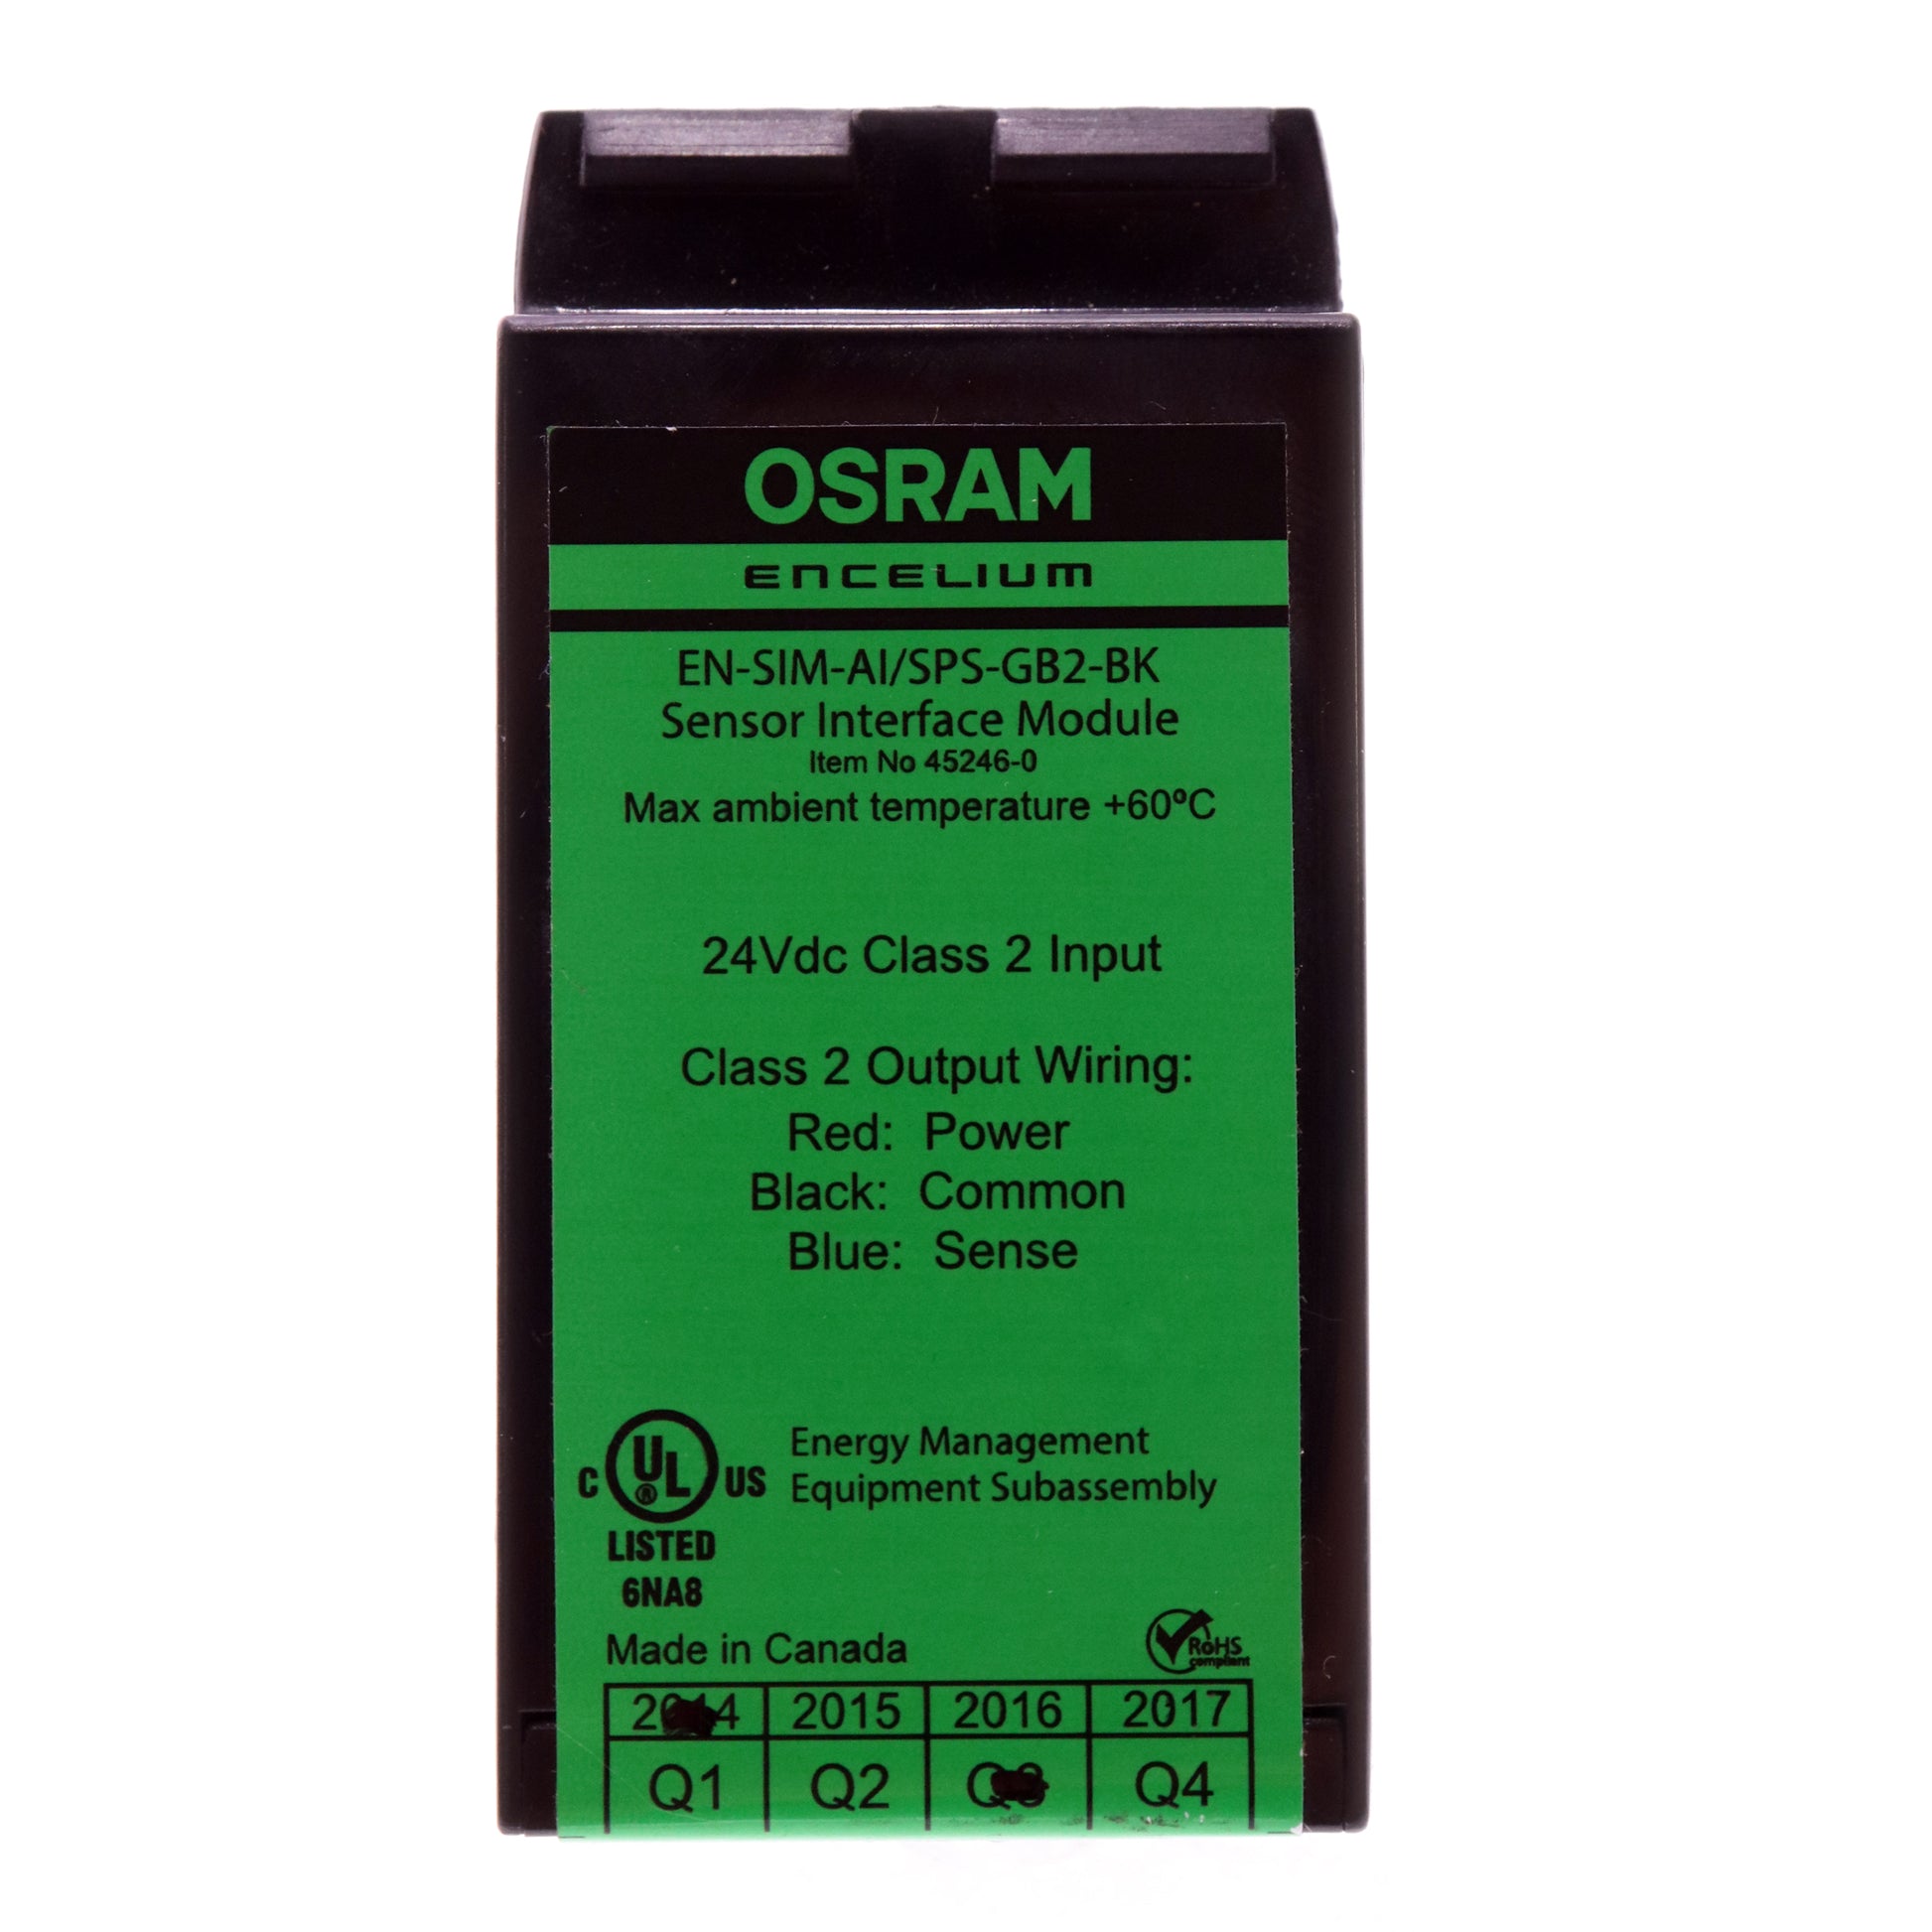 Osram EN-SIM-AI/SPS-GB2-BK